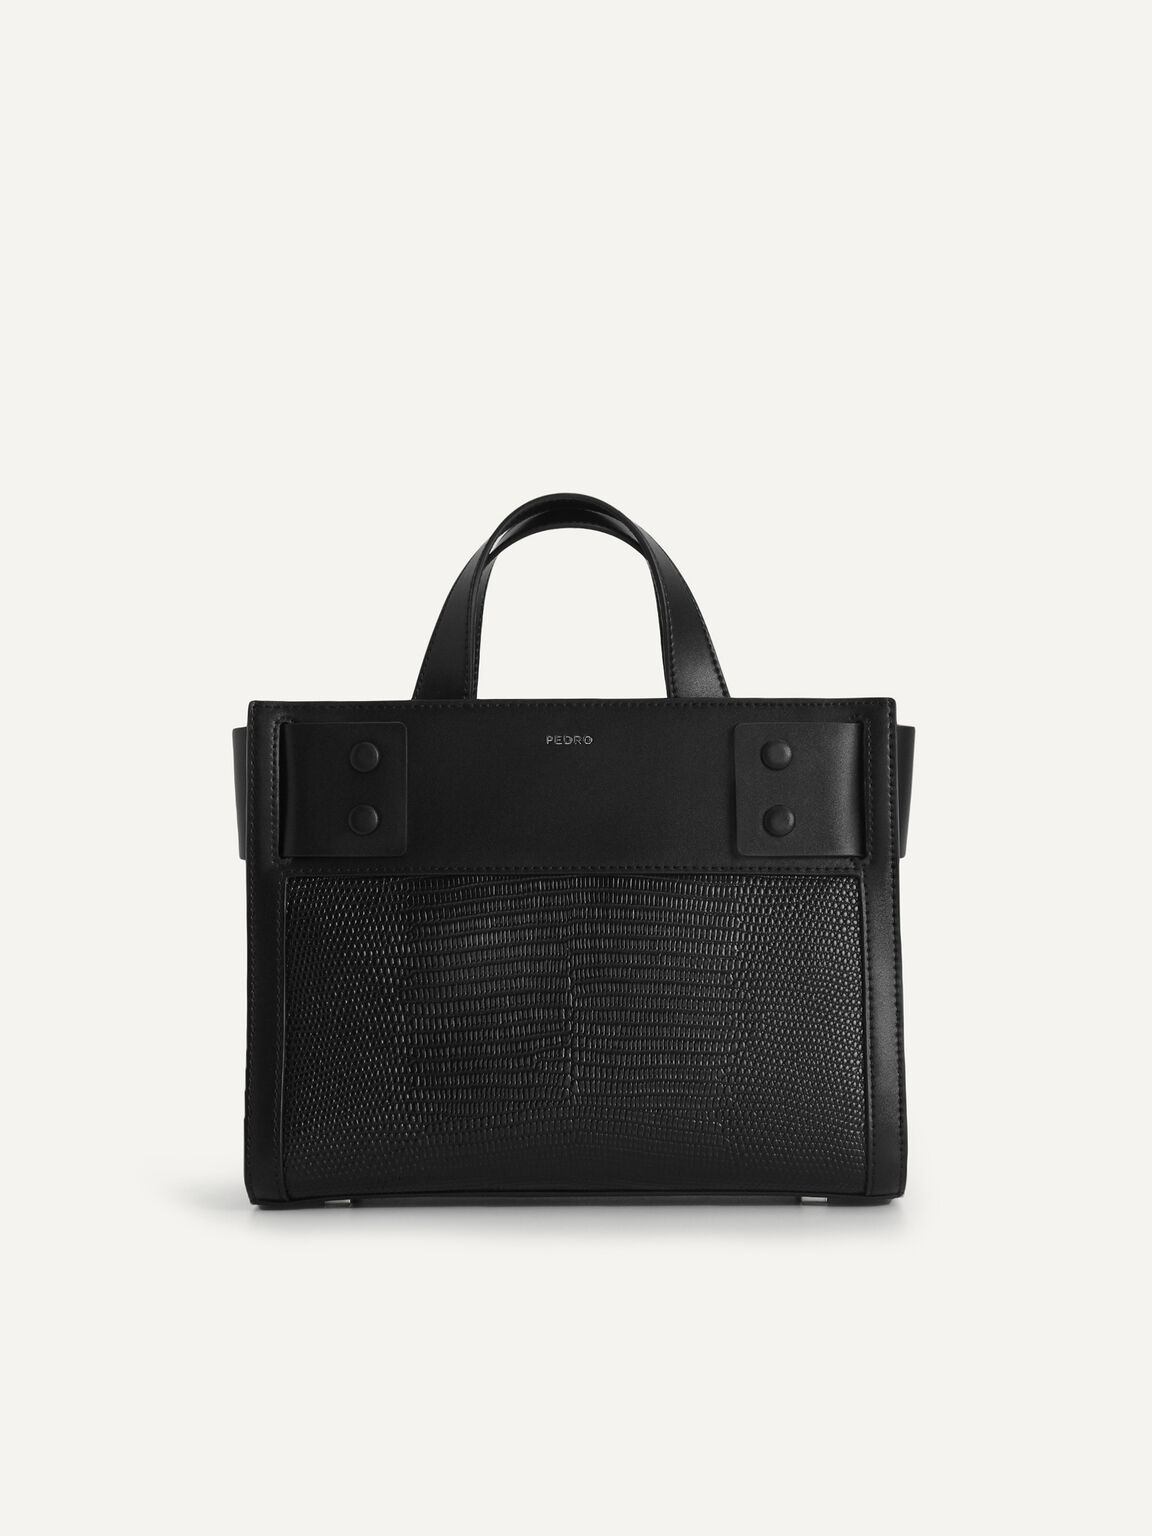 Lizard-Effect Leather Top Handle Bag, Black, hi-res